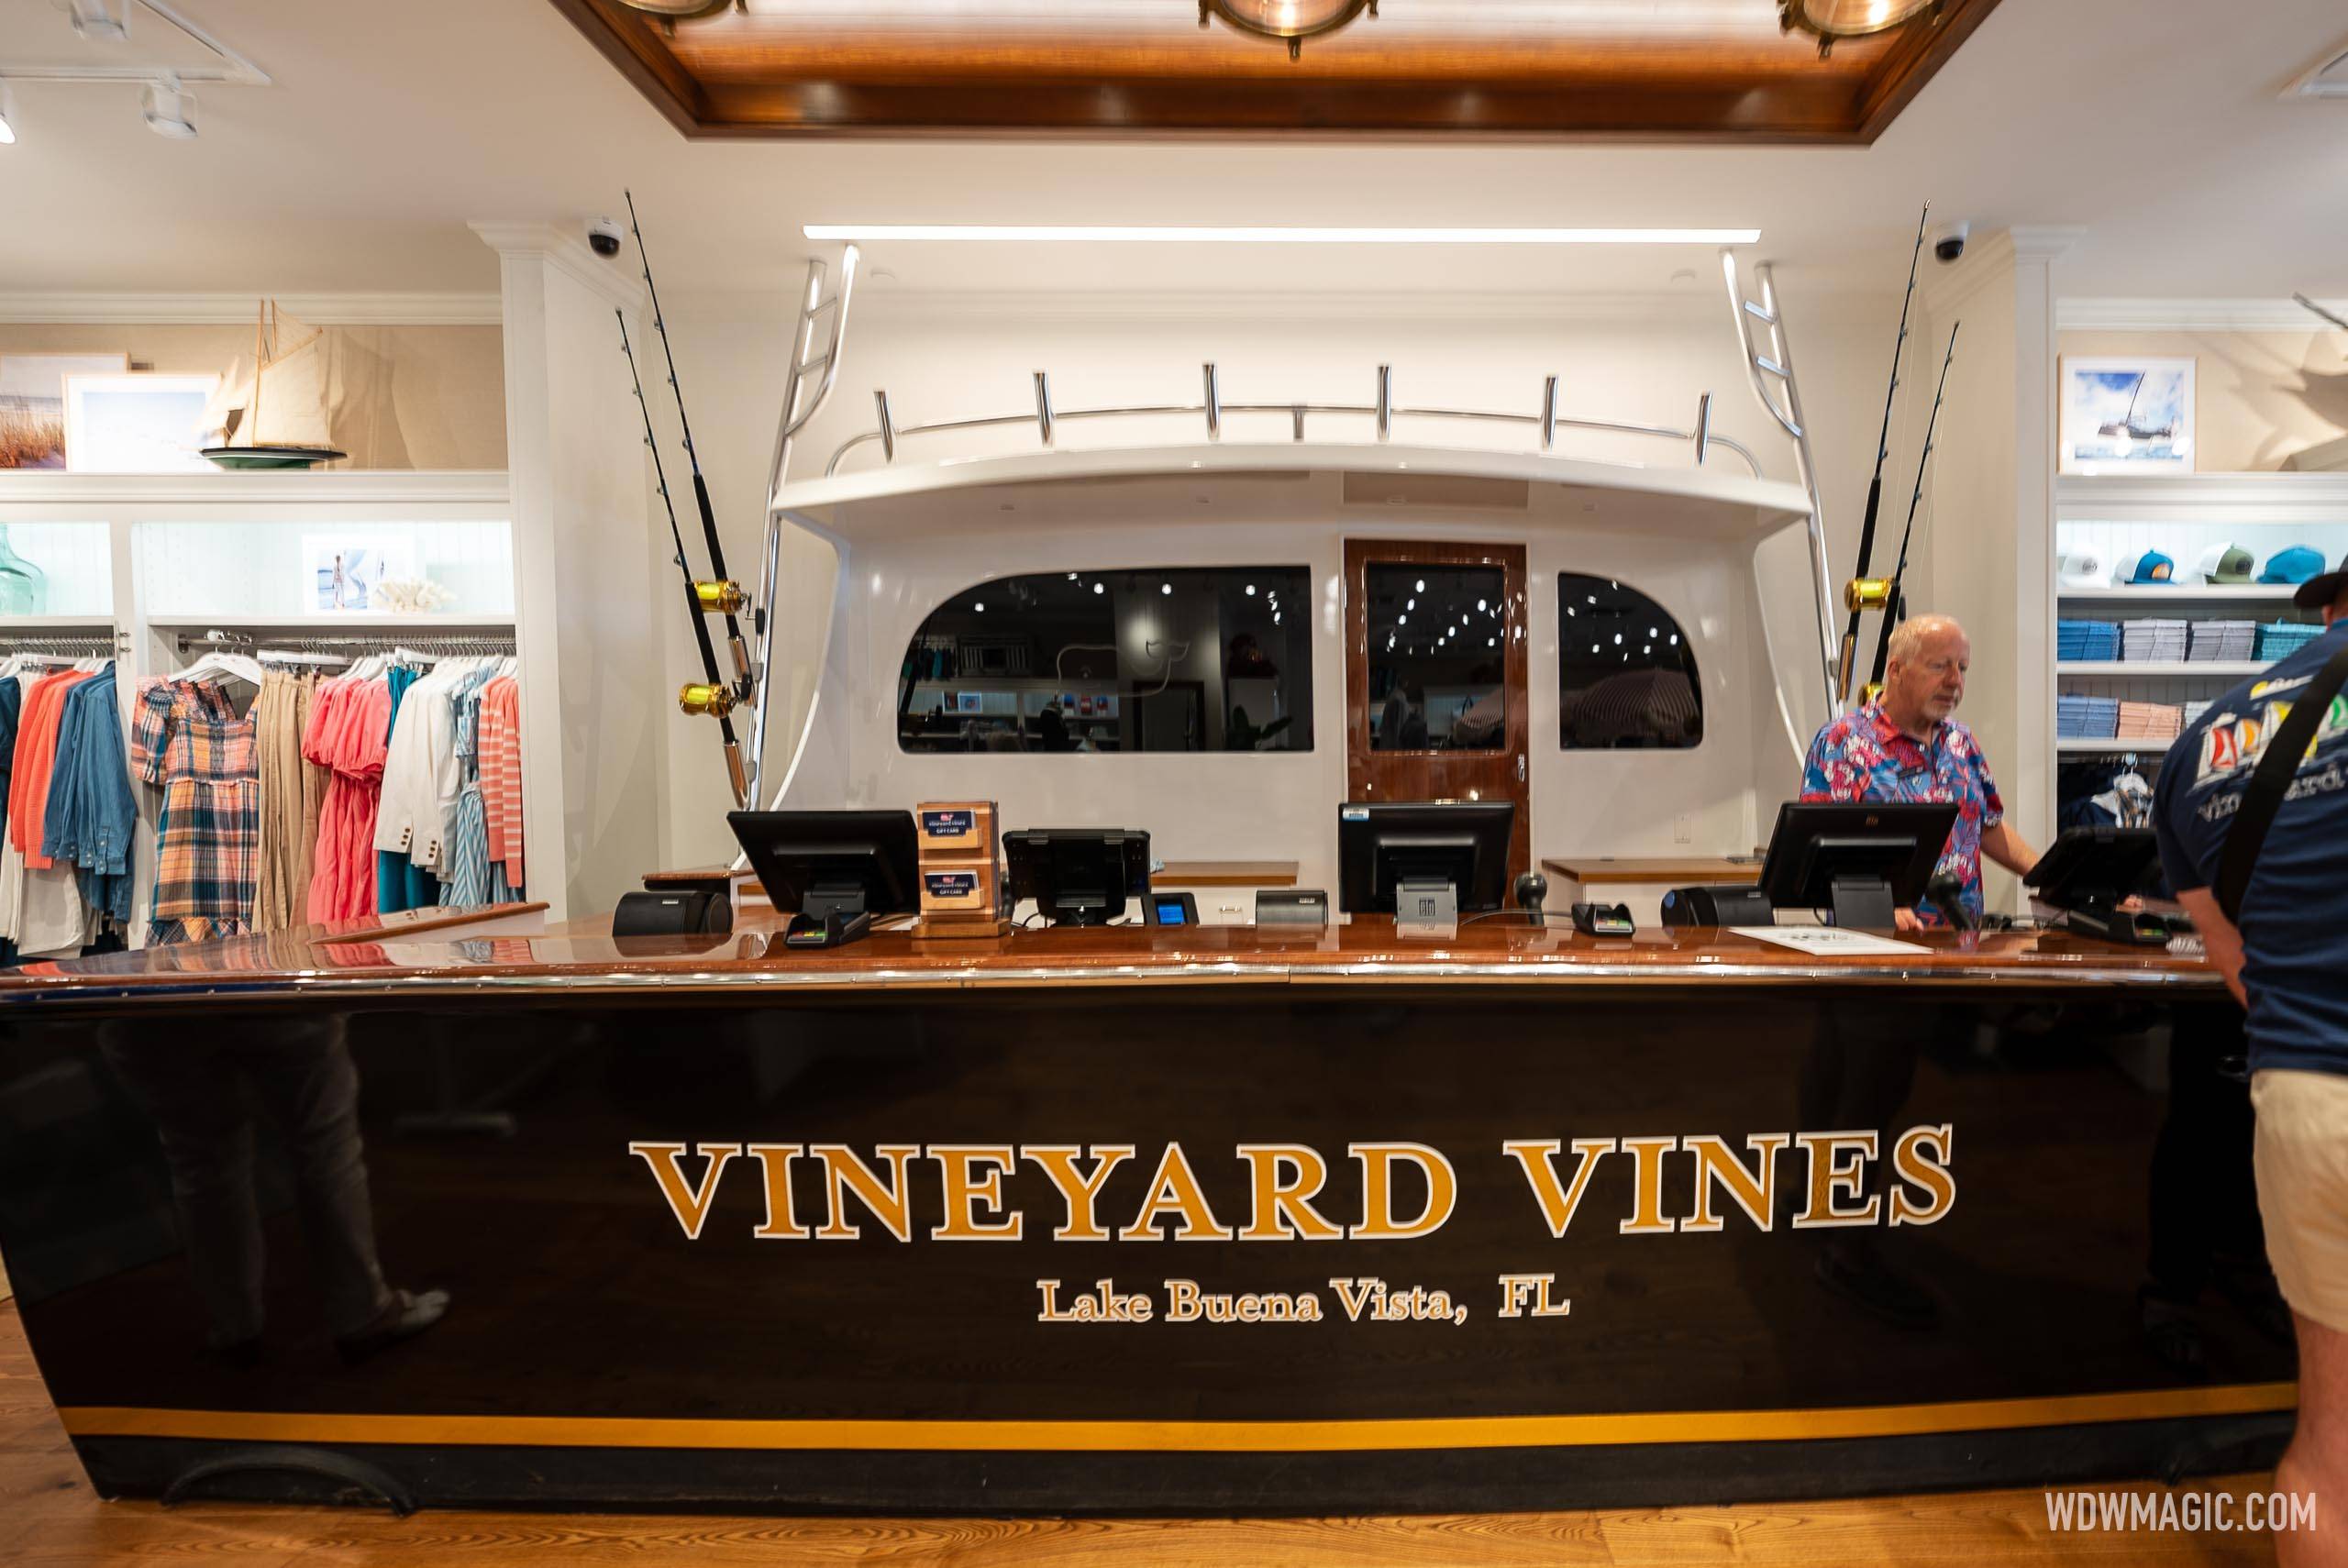 Vienyard Vines overview